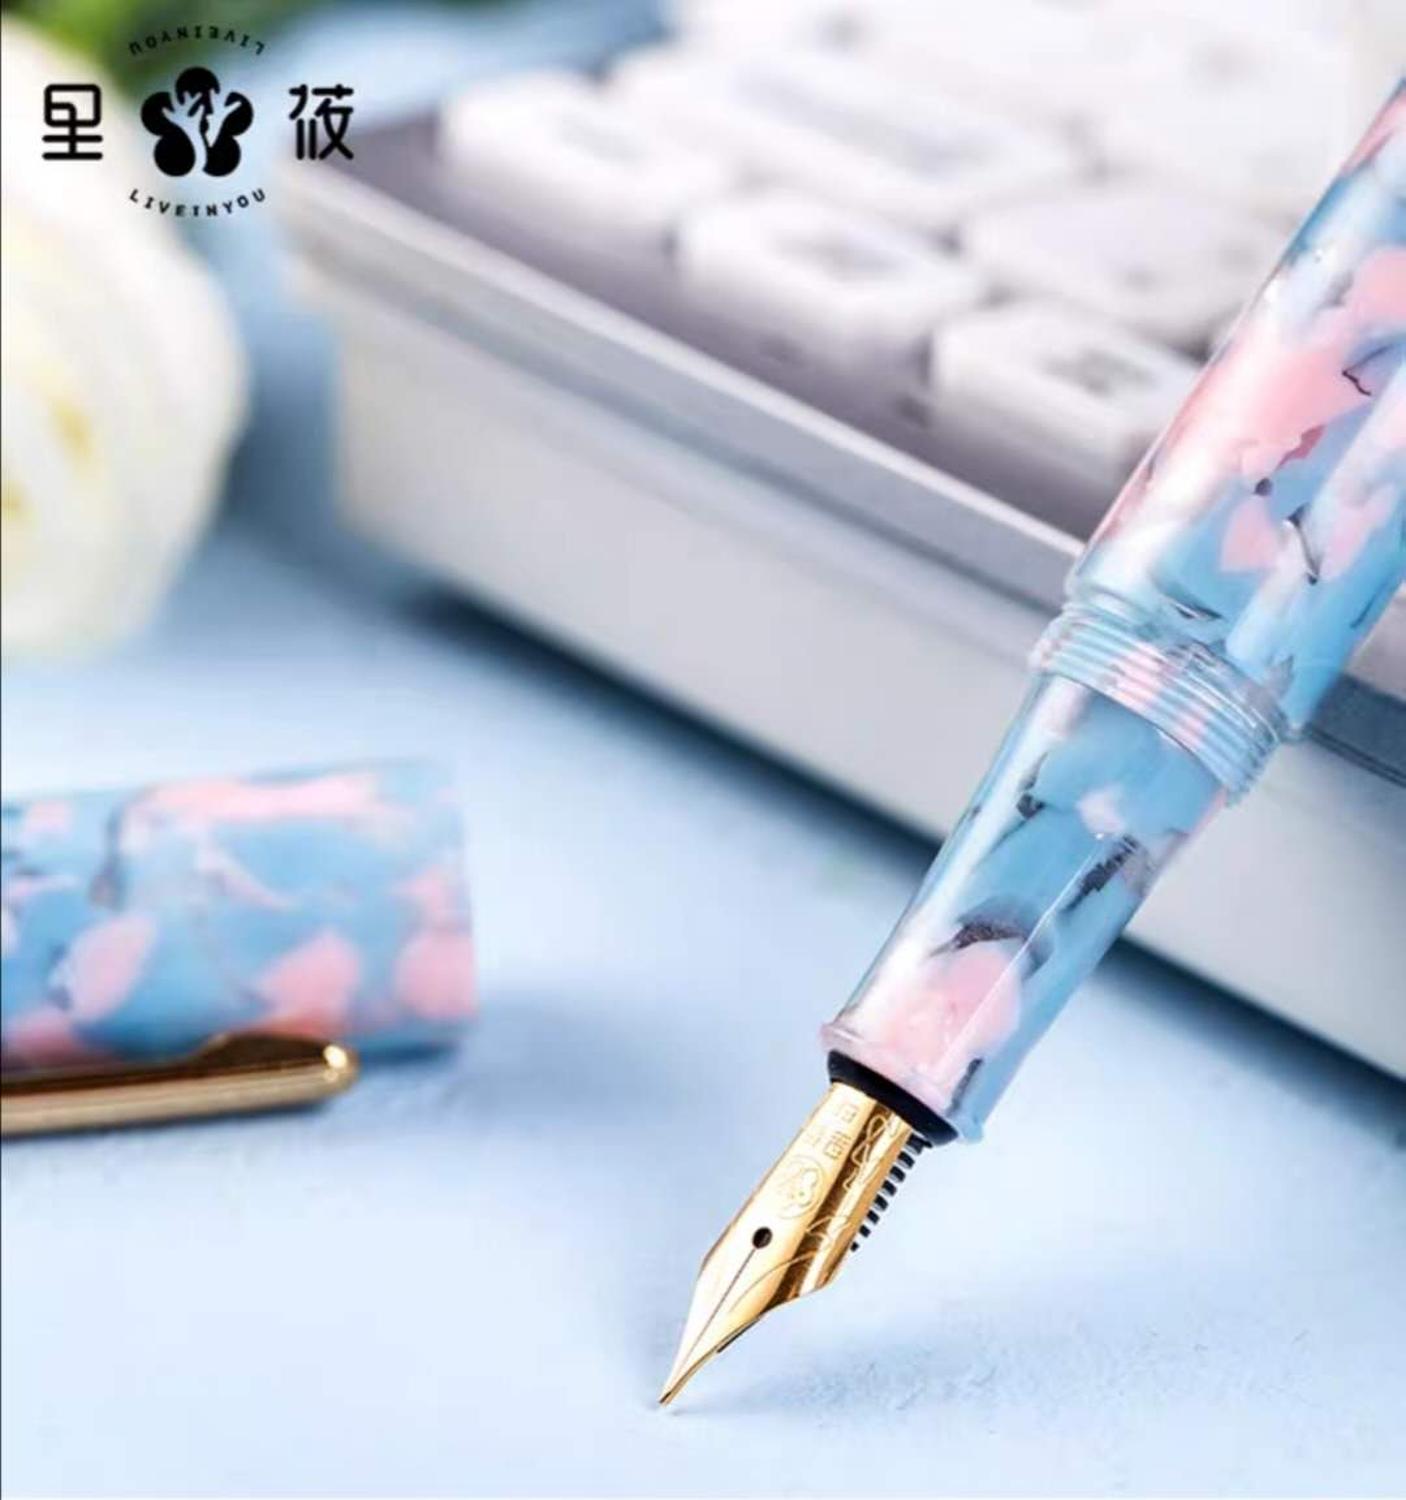 LIY Resin Fountain Pen Ink Pen Fine Nib Converter Filler Golden Clip Stationery Office school supplies Writing Pens Gift